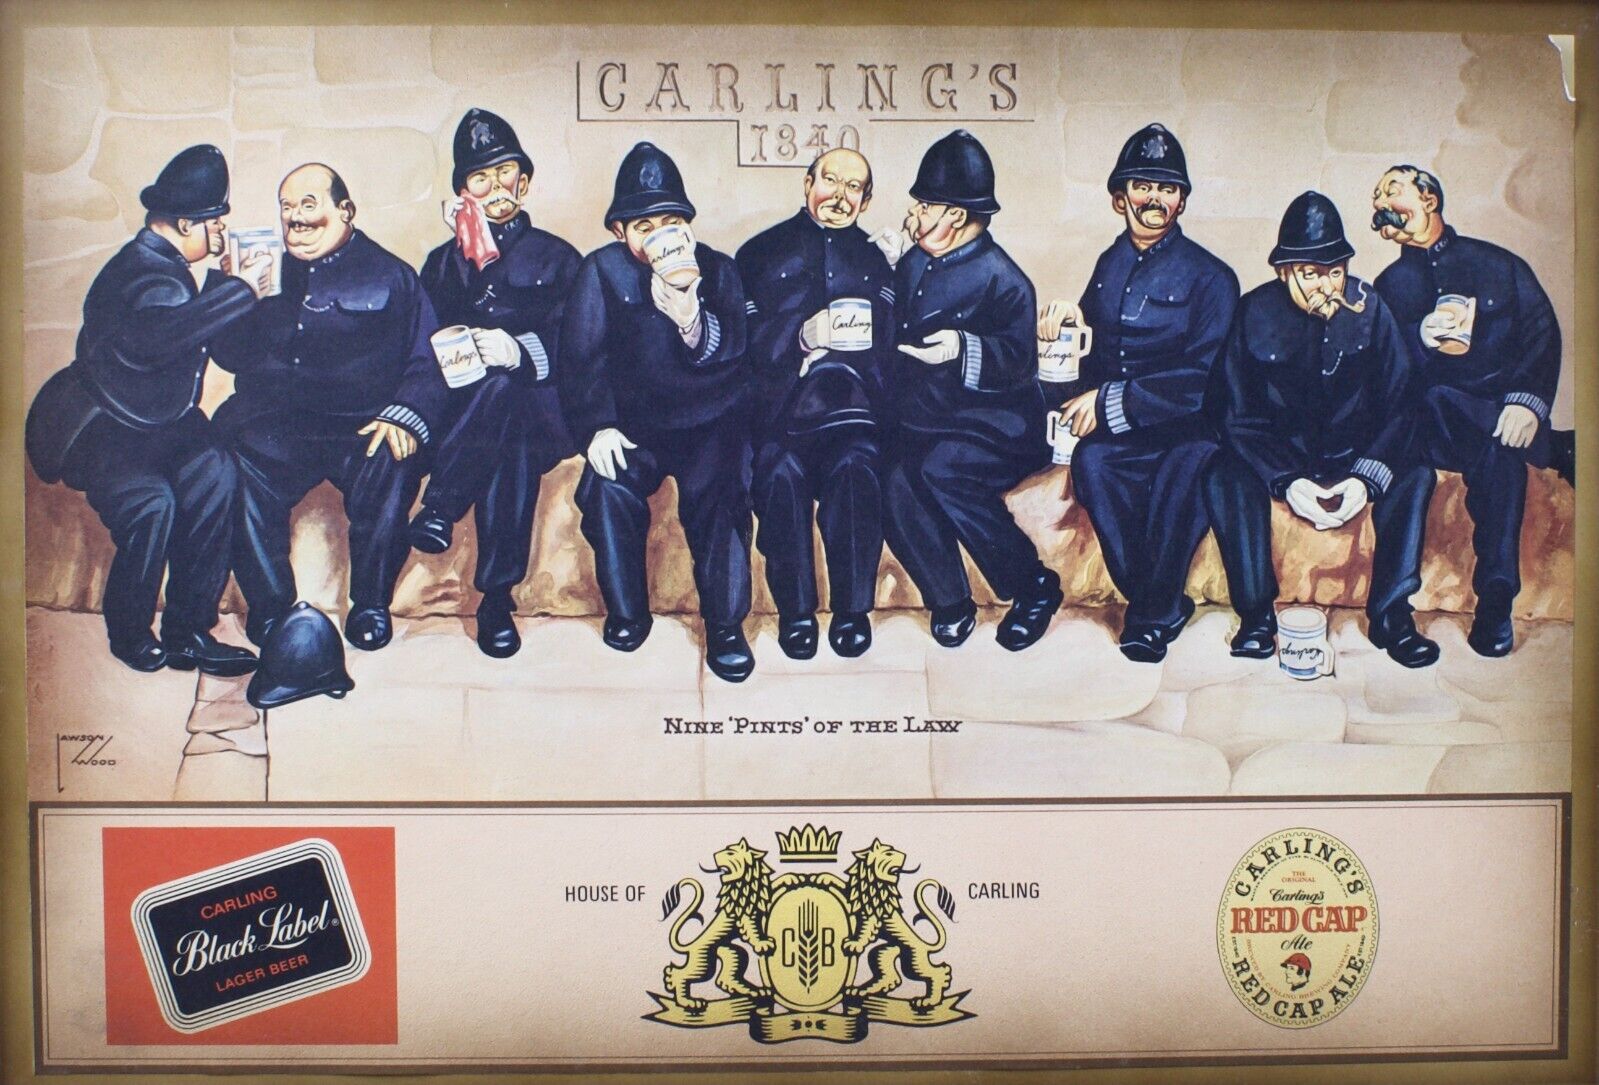 Vintage Carling's Black Label Beer Tray Nine Pints of the Law Bar Display Sign